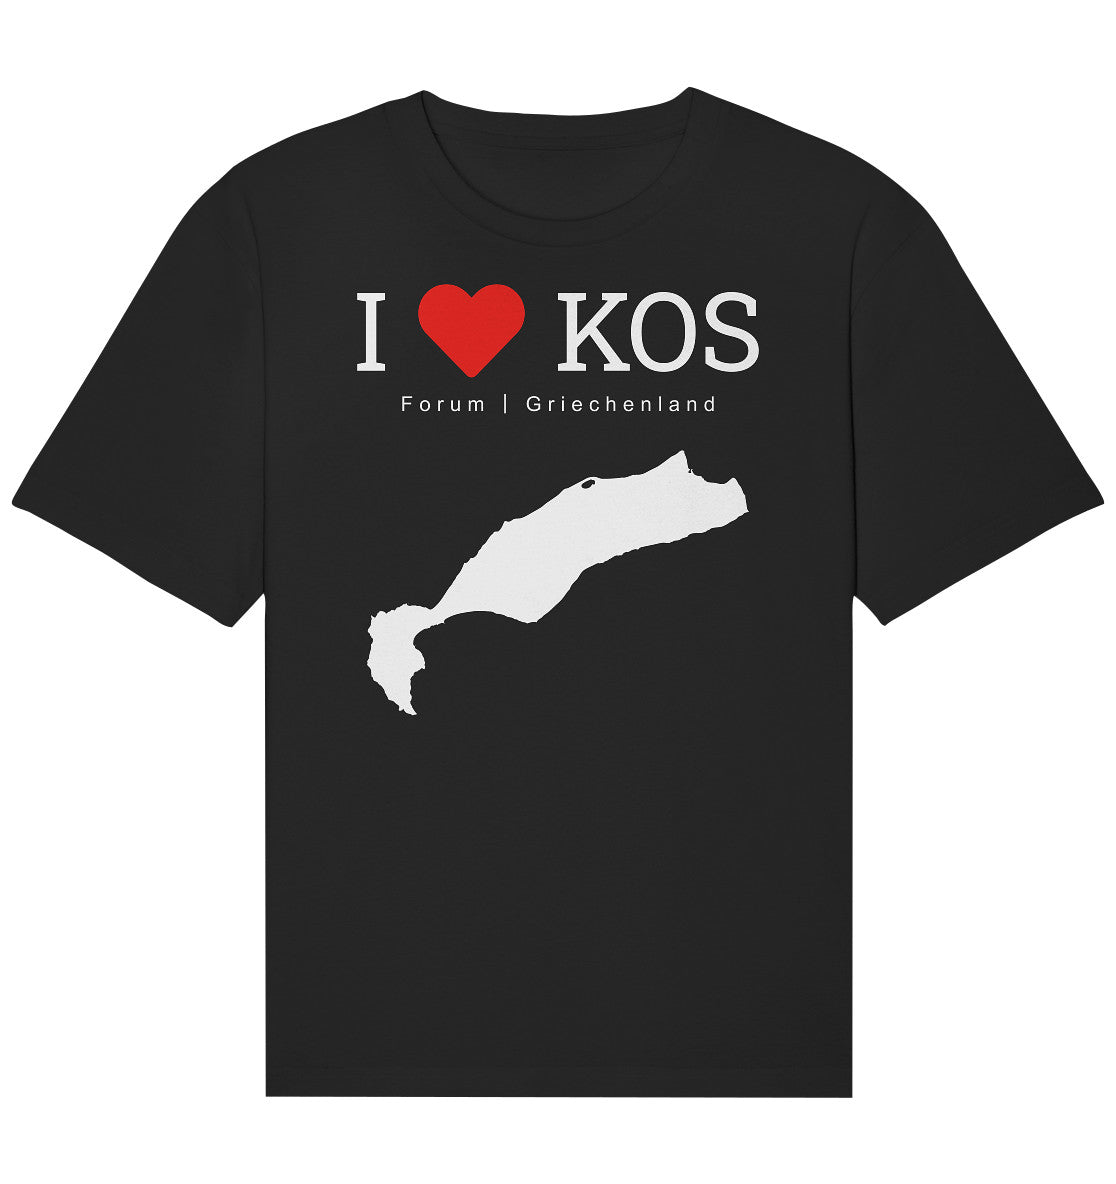 I LOVE KOS - Forum Griechenland White - Organic Relaxed Shirt